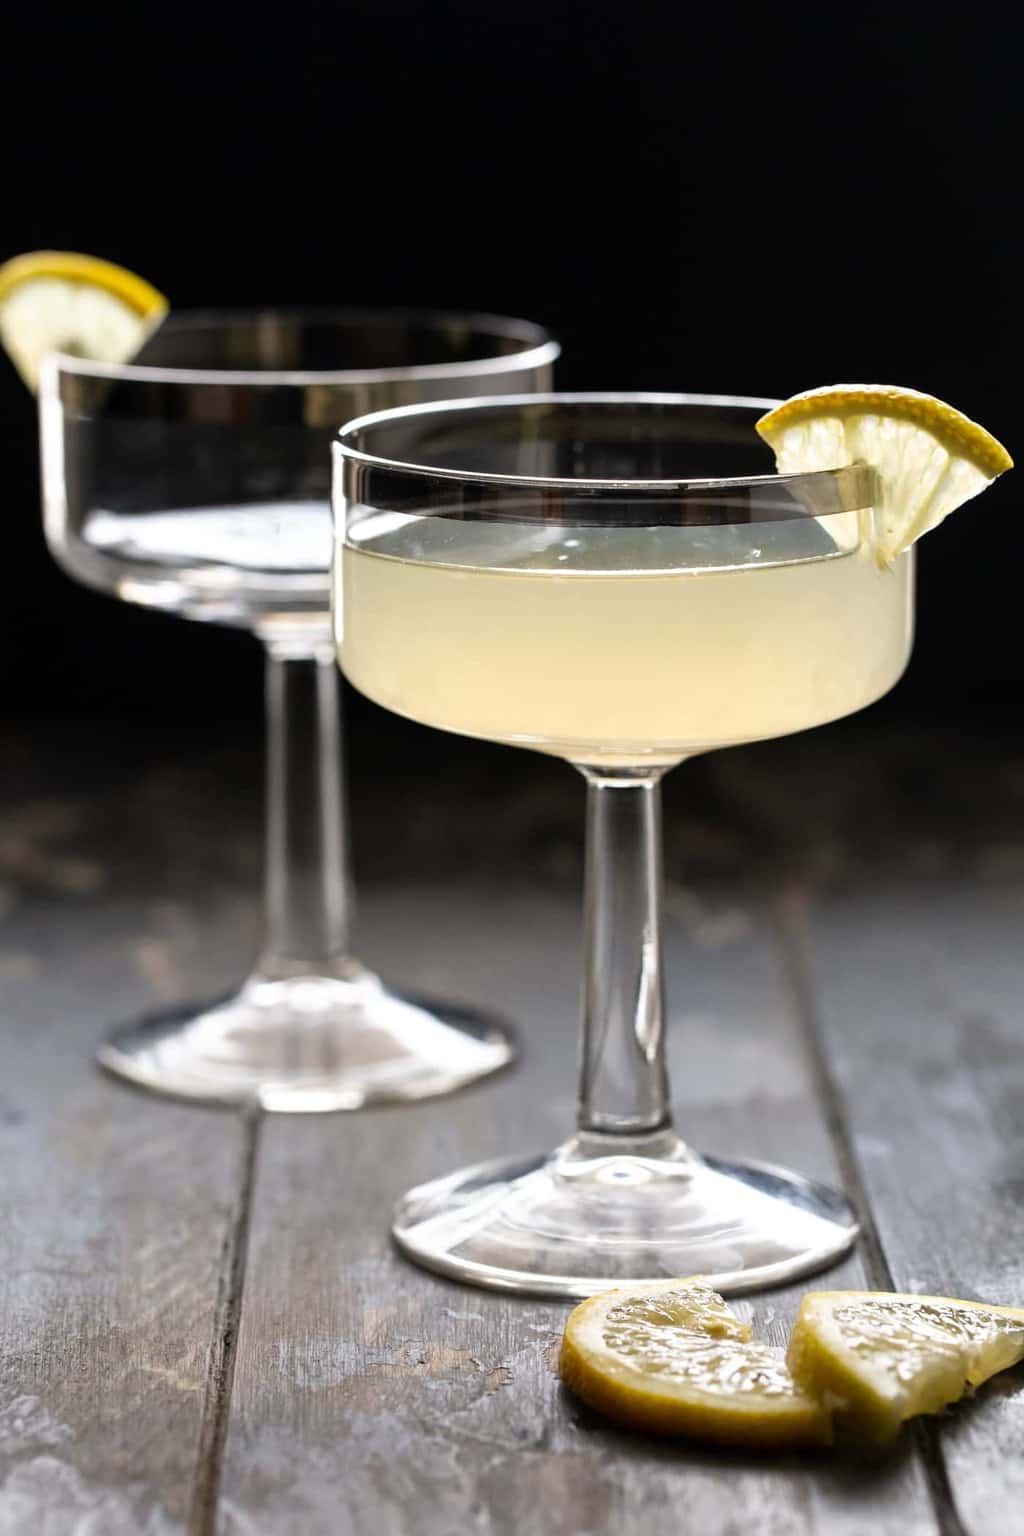 Easy Pear Martini - Garnish with Lemon